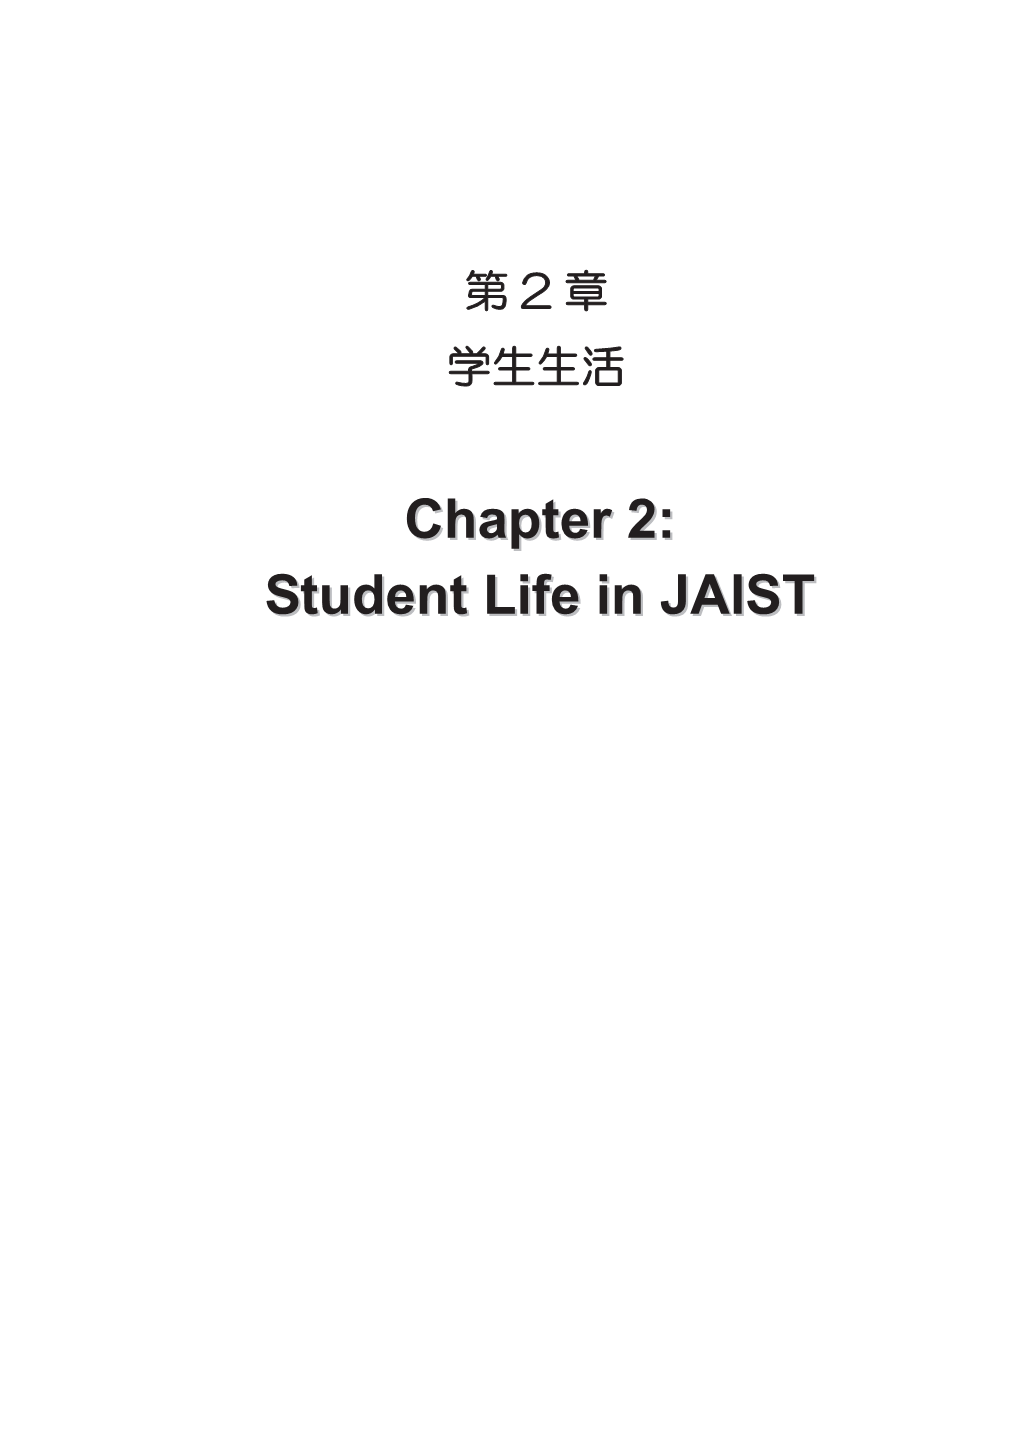 Chapter 2: Student Life in JAIST